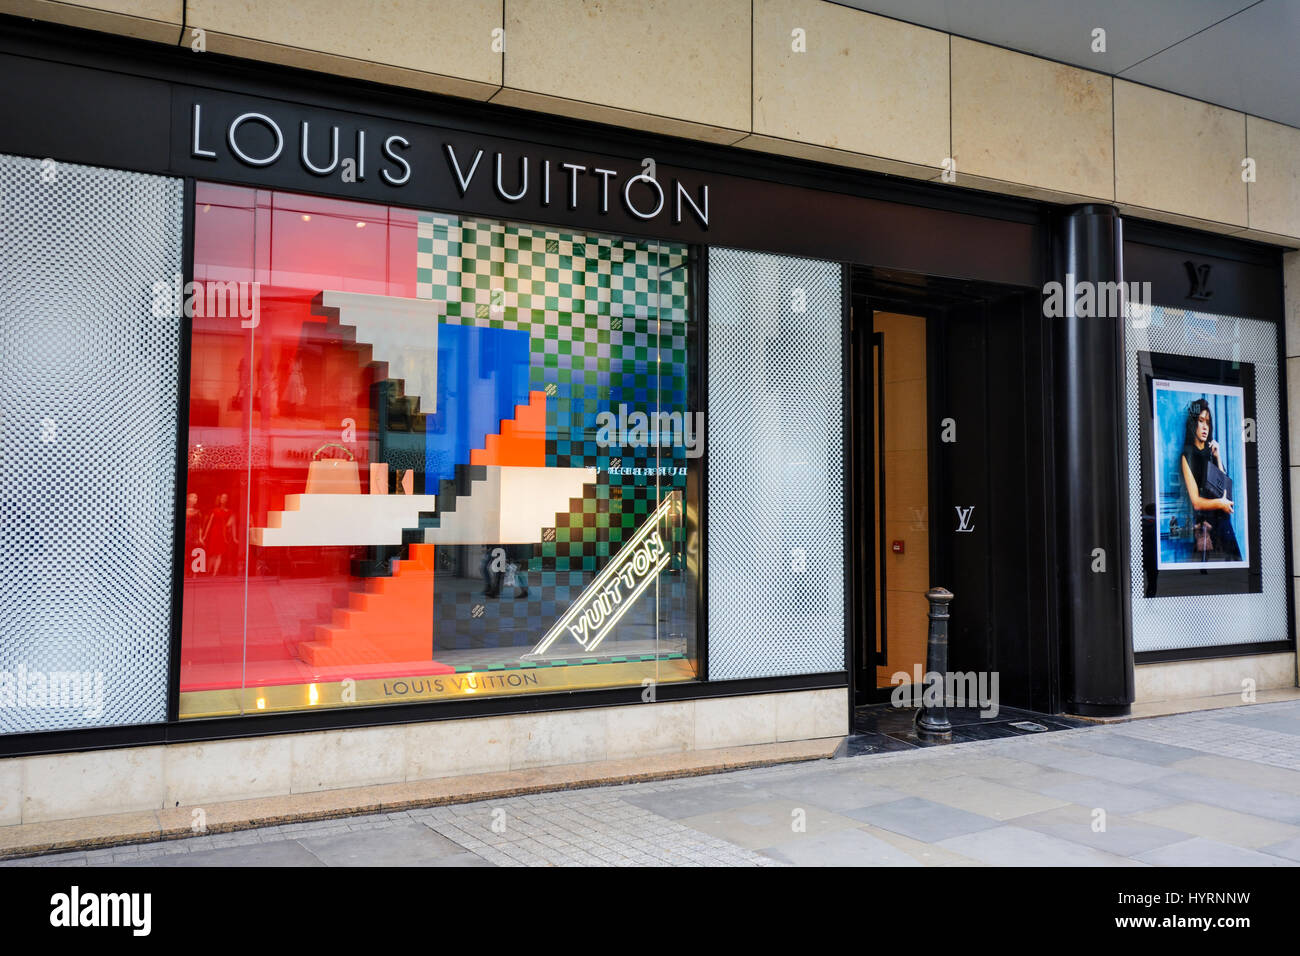 Louis Vuitton shopfront in Manchester city centre Stock Photo - Alamy